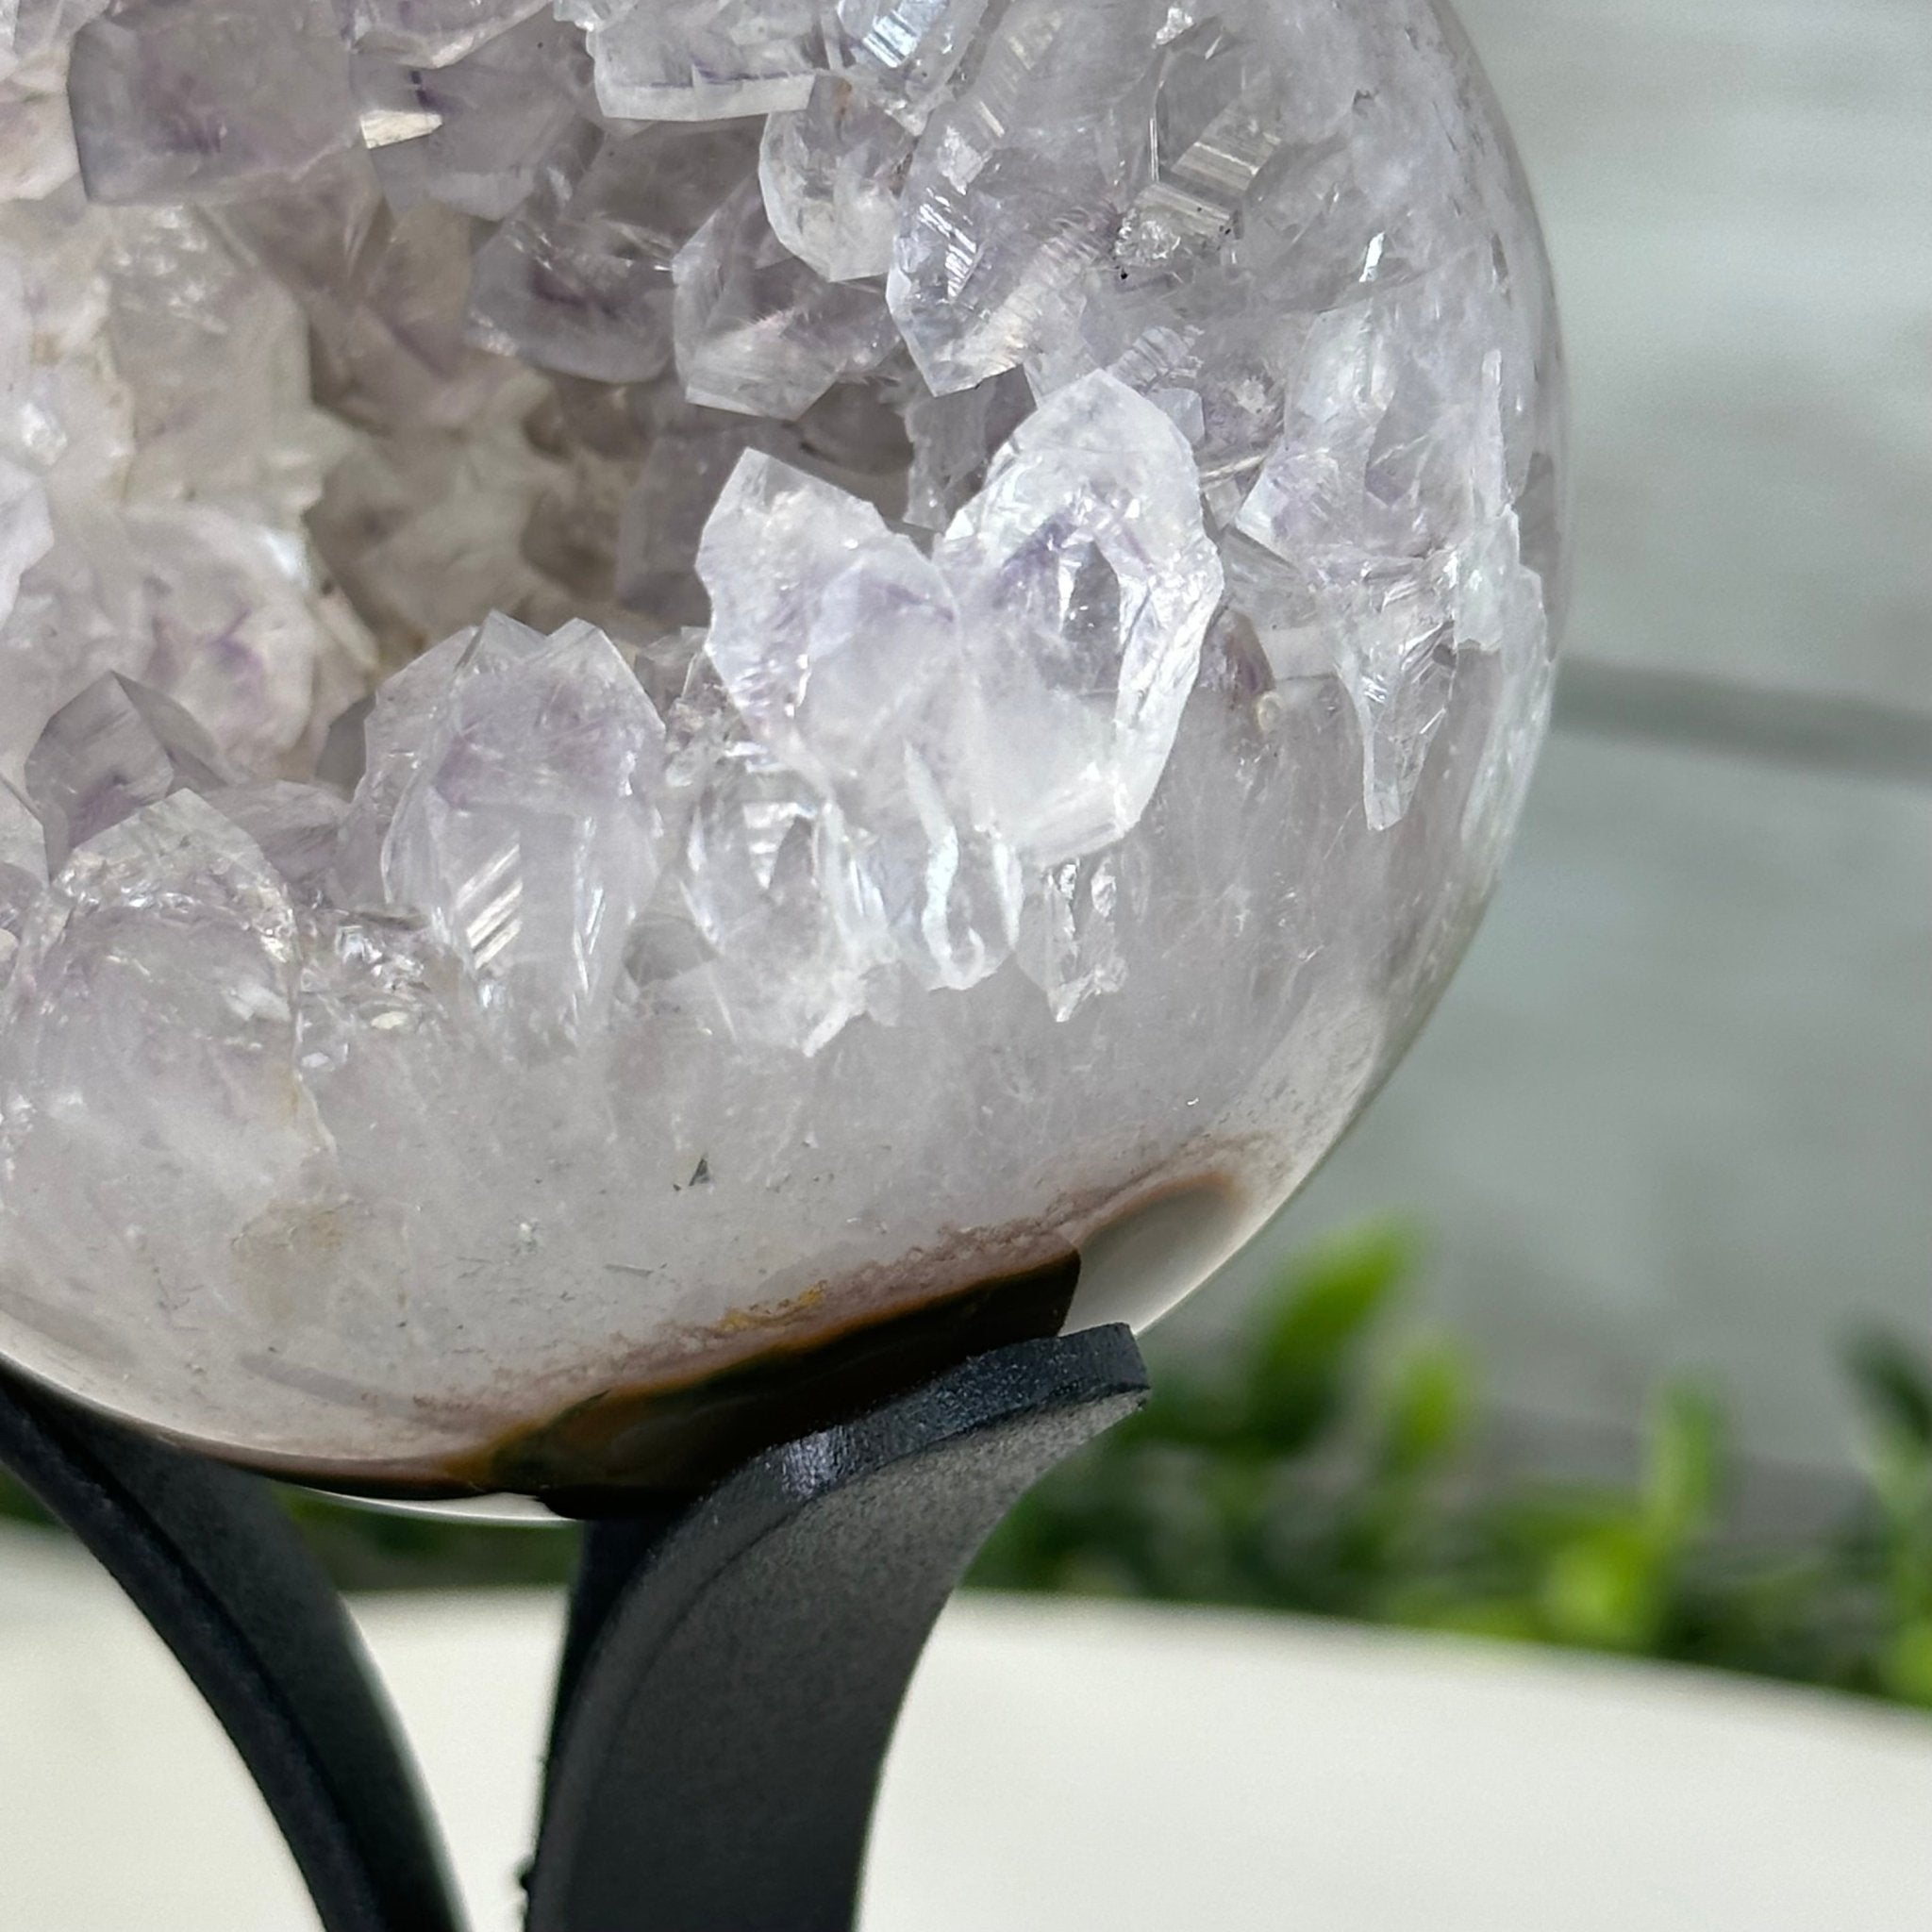 Druzy Amethyst Sphere on a Metal Stand, 0.7 lbs & 6.1" Tall #5630-0031 - Brazil GemsBrazil GemsDruzy Amethyst Sphere on a Metal Stand, 0.7 lbs & 6.1" Tall #5630-0031Spheres5630-0031